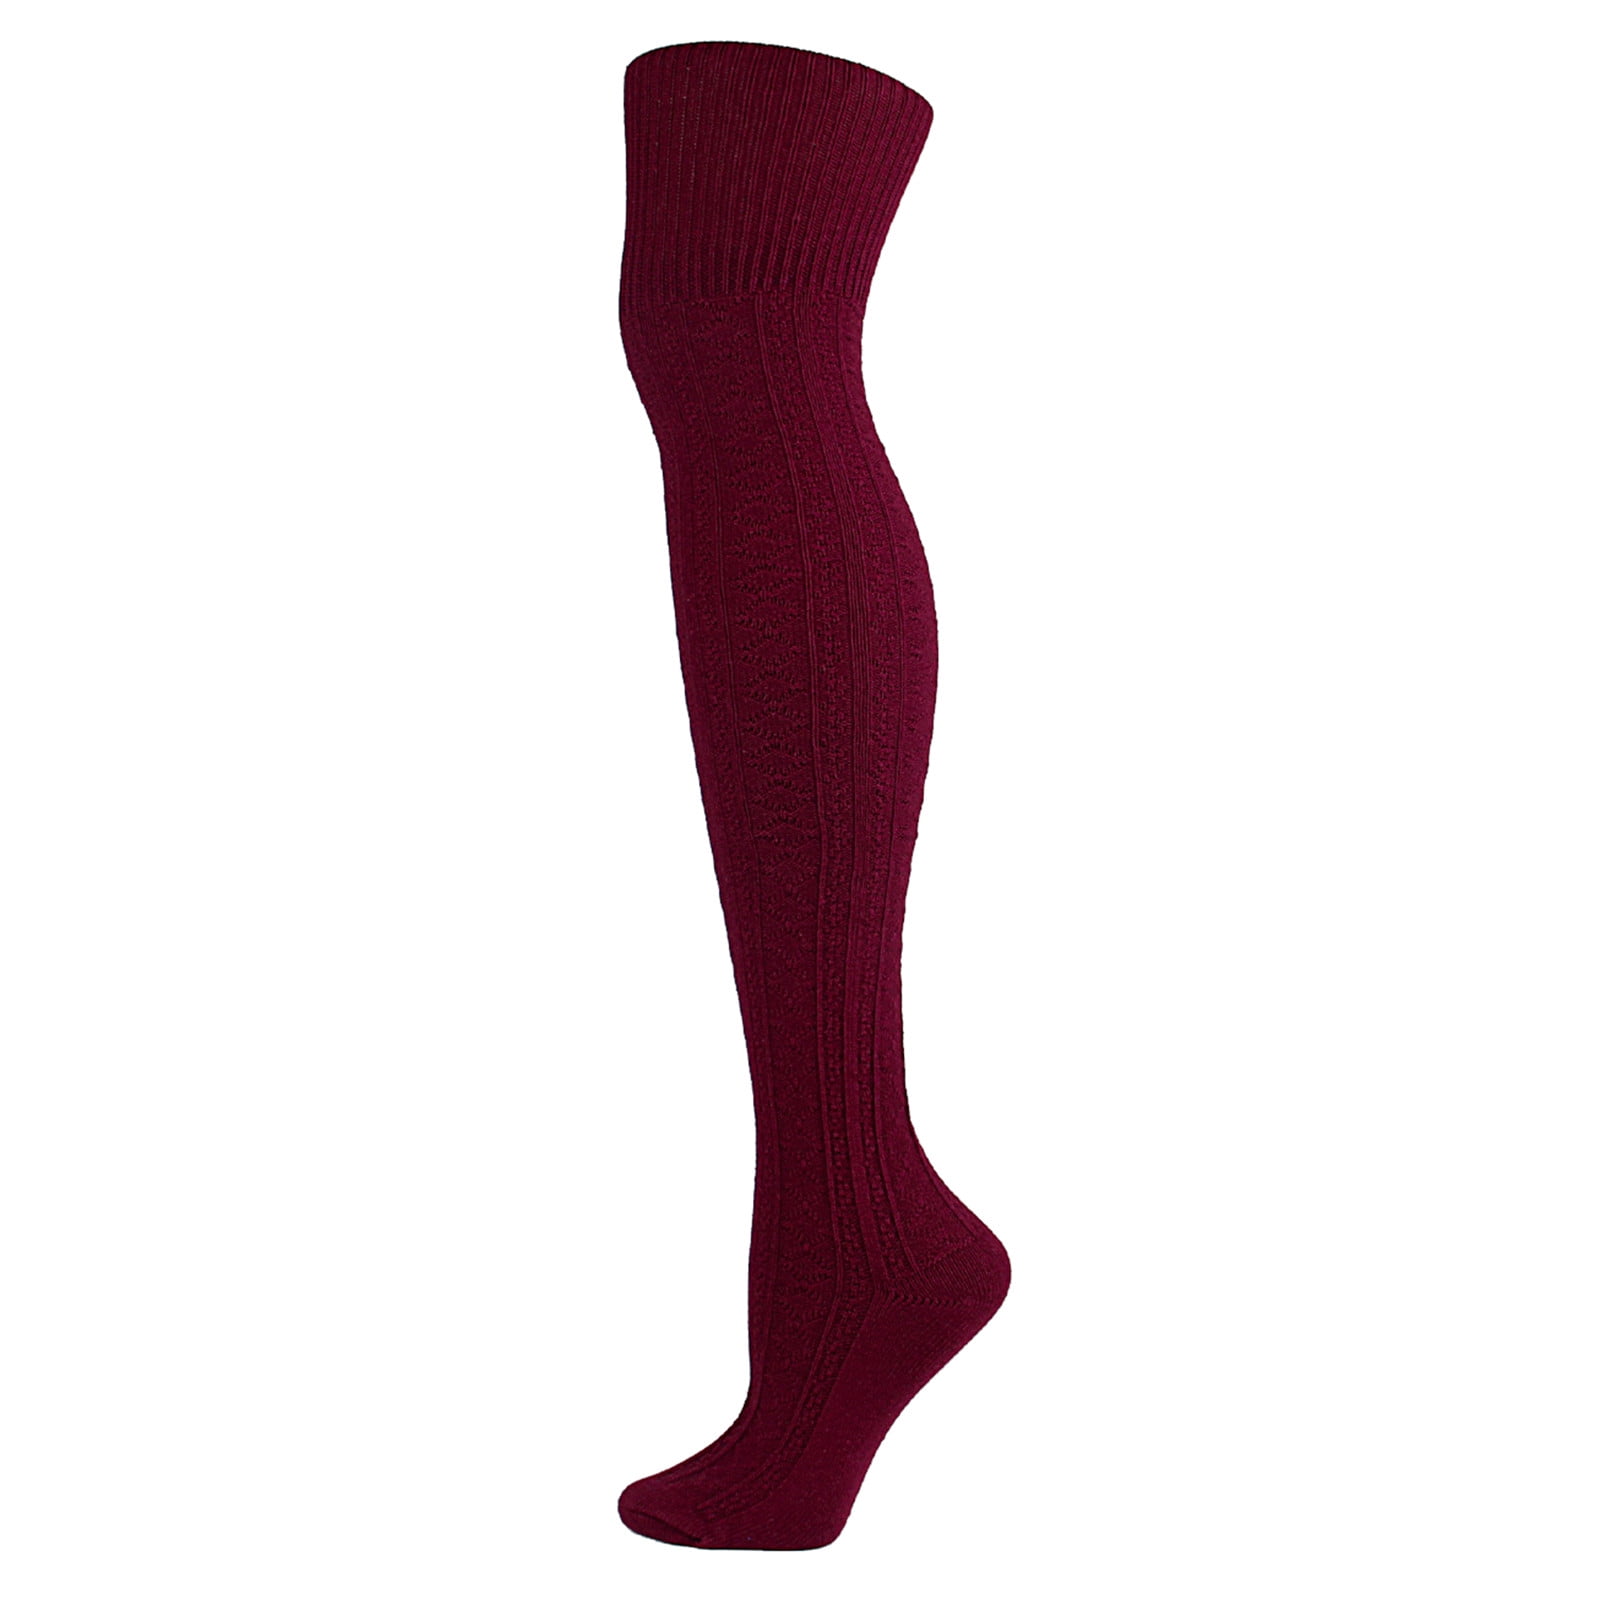 Utoimkio Crew Socks for Women Clearance Adult Women Knitting Solid ...